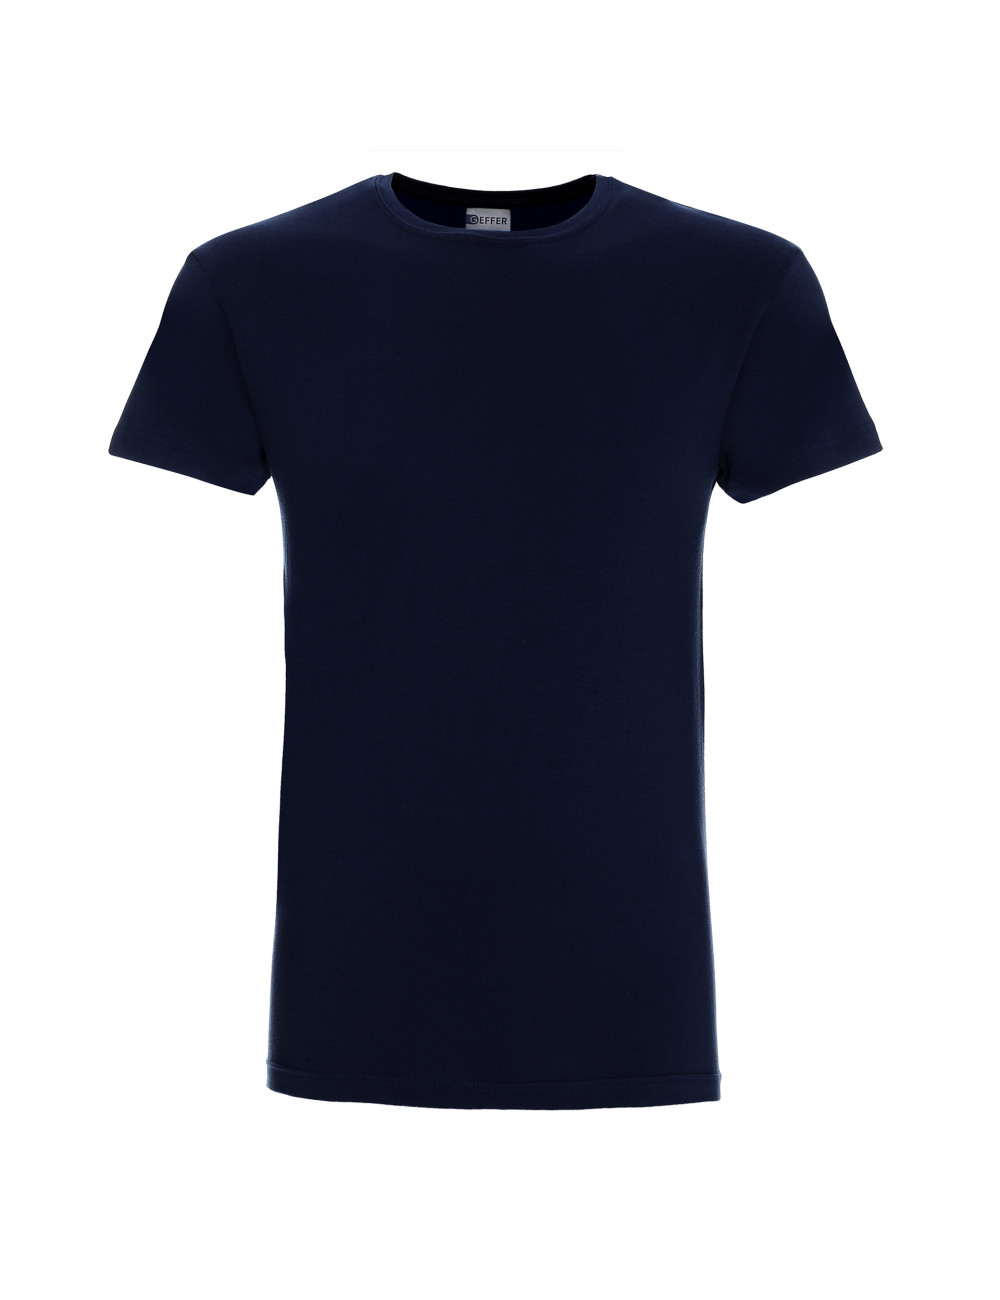 Herren T-Shirt 100 marineblau Geffer